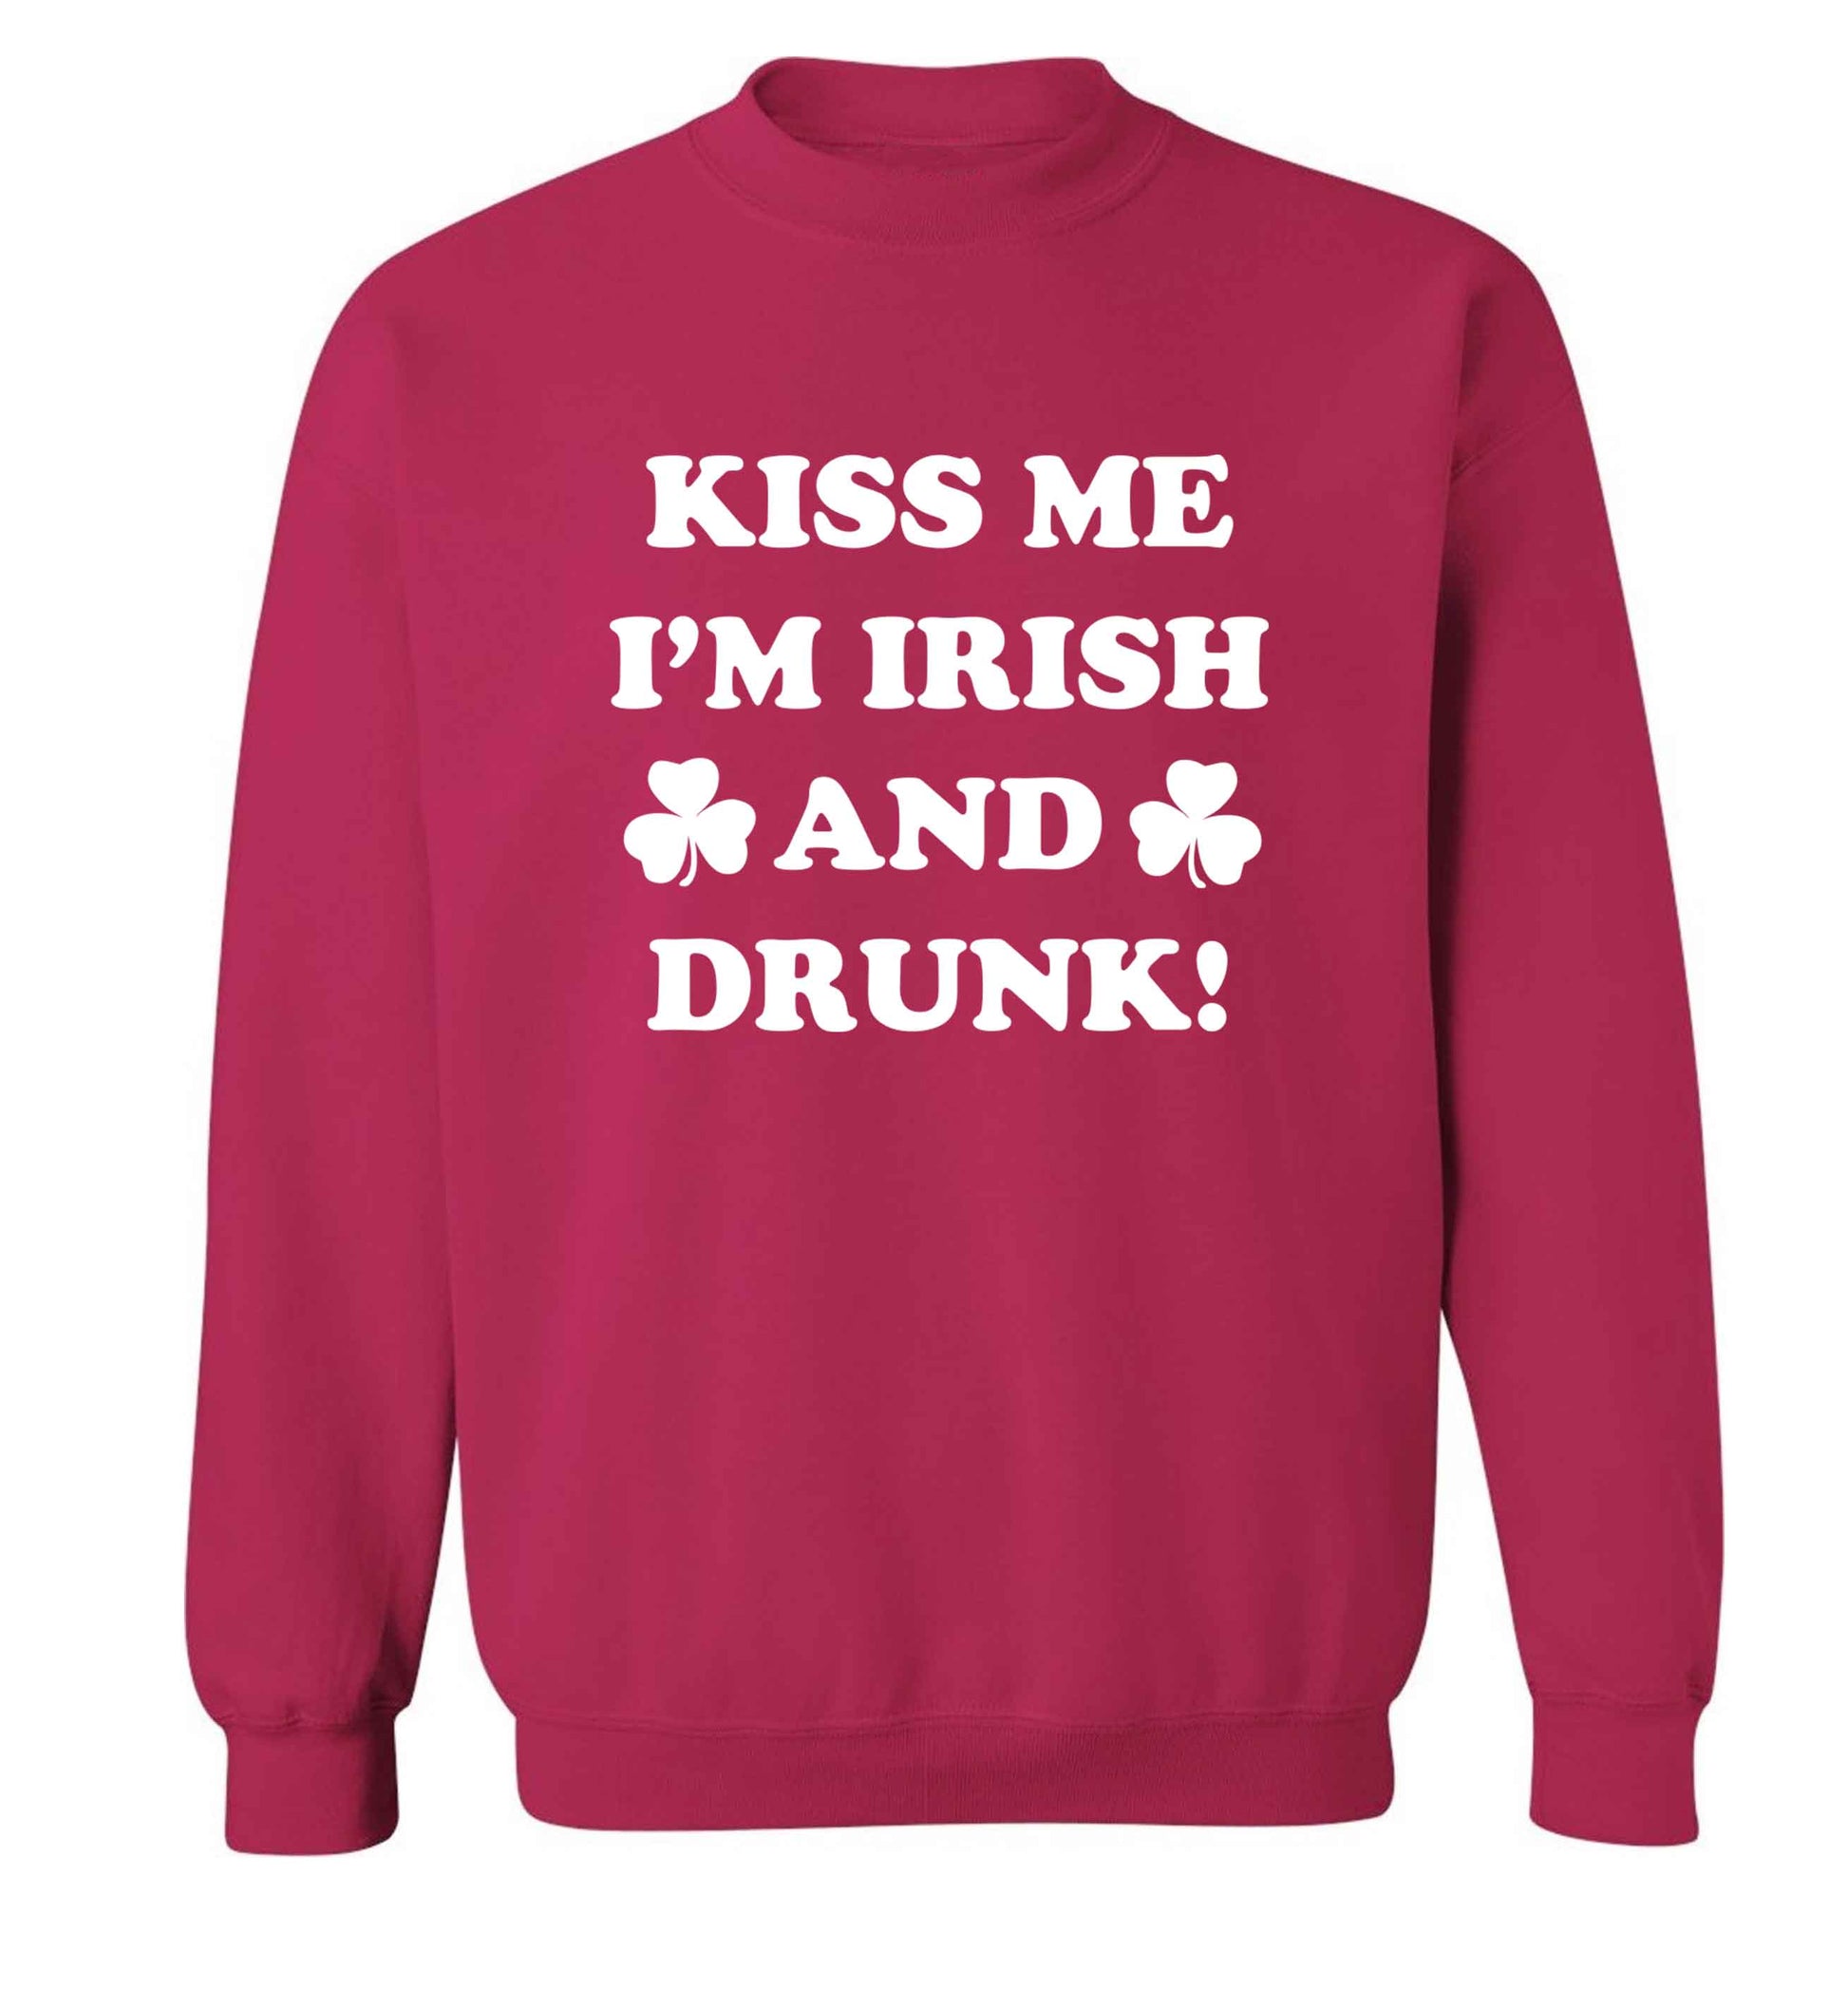 Kiss me I'm Irish and drunk adult's unisex pink sweater 2XL